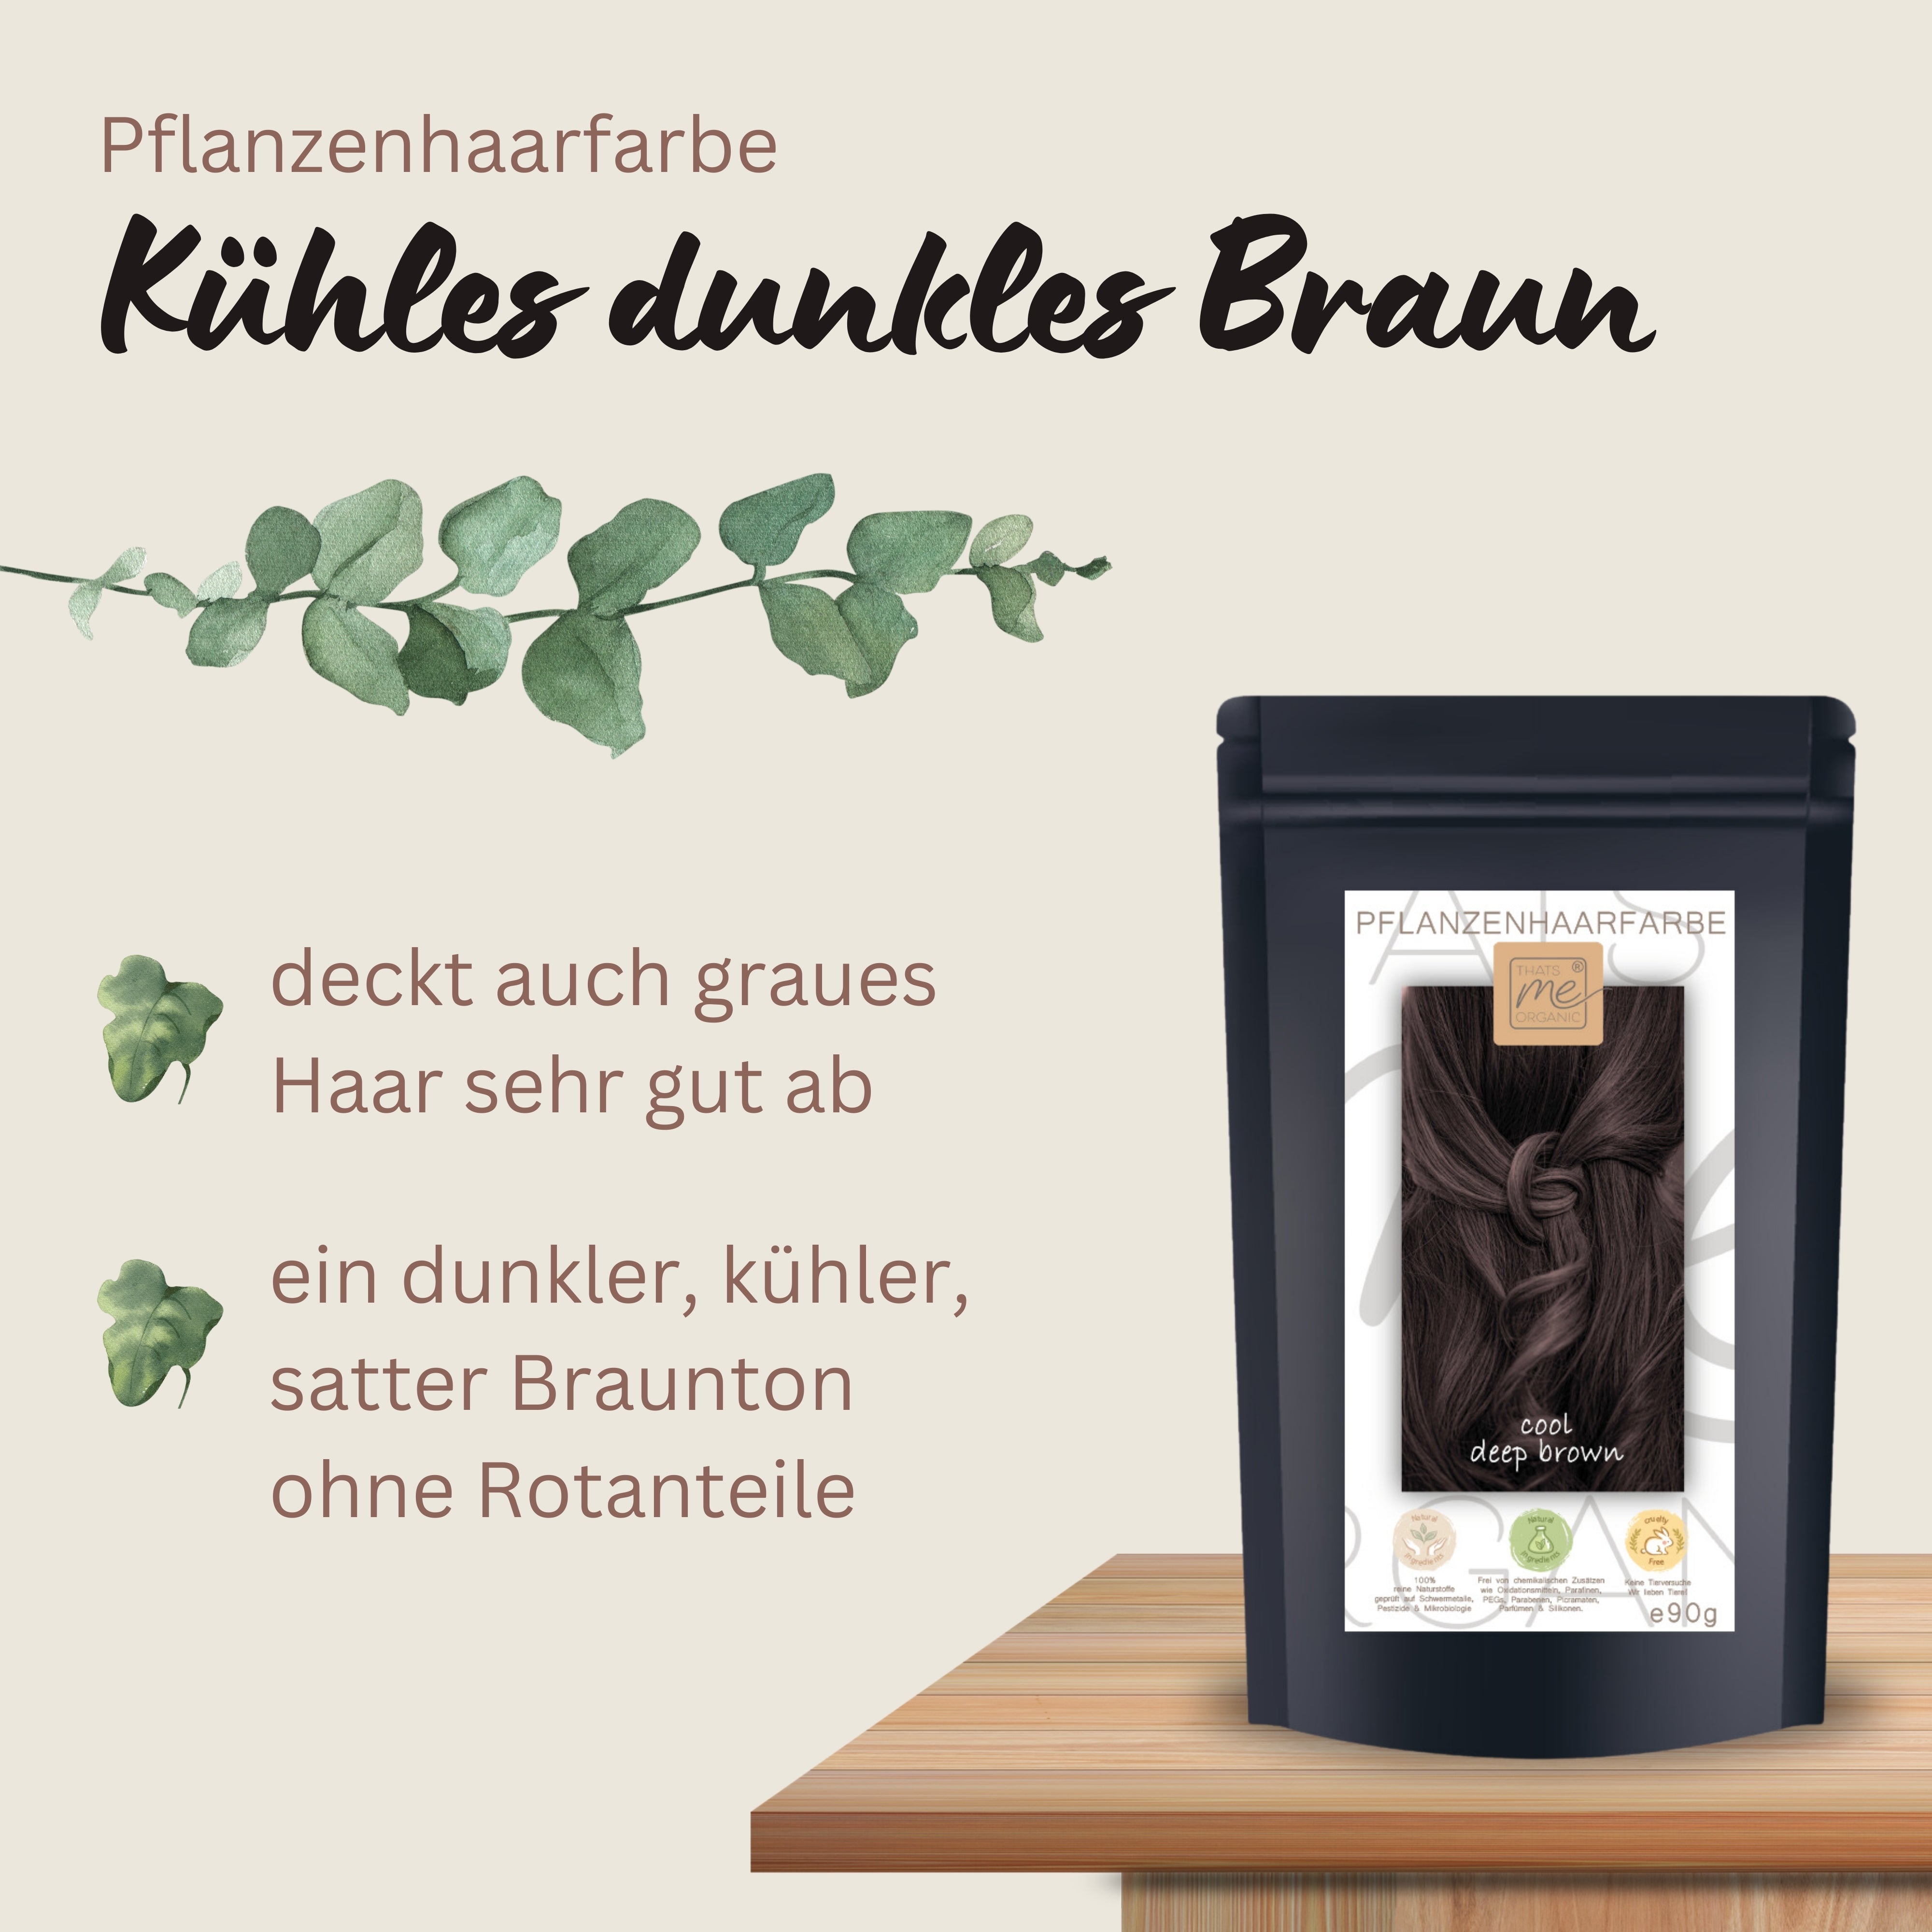 Profi-Pflanzenhaarfarbe SET kühles dunkles Braun "cool deep brown"